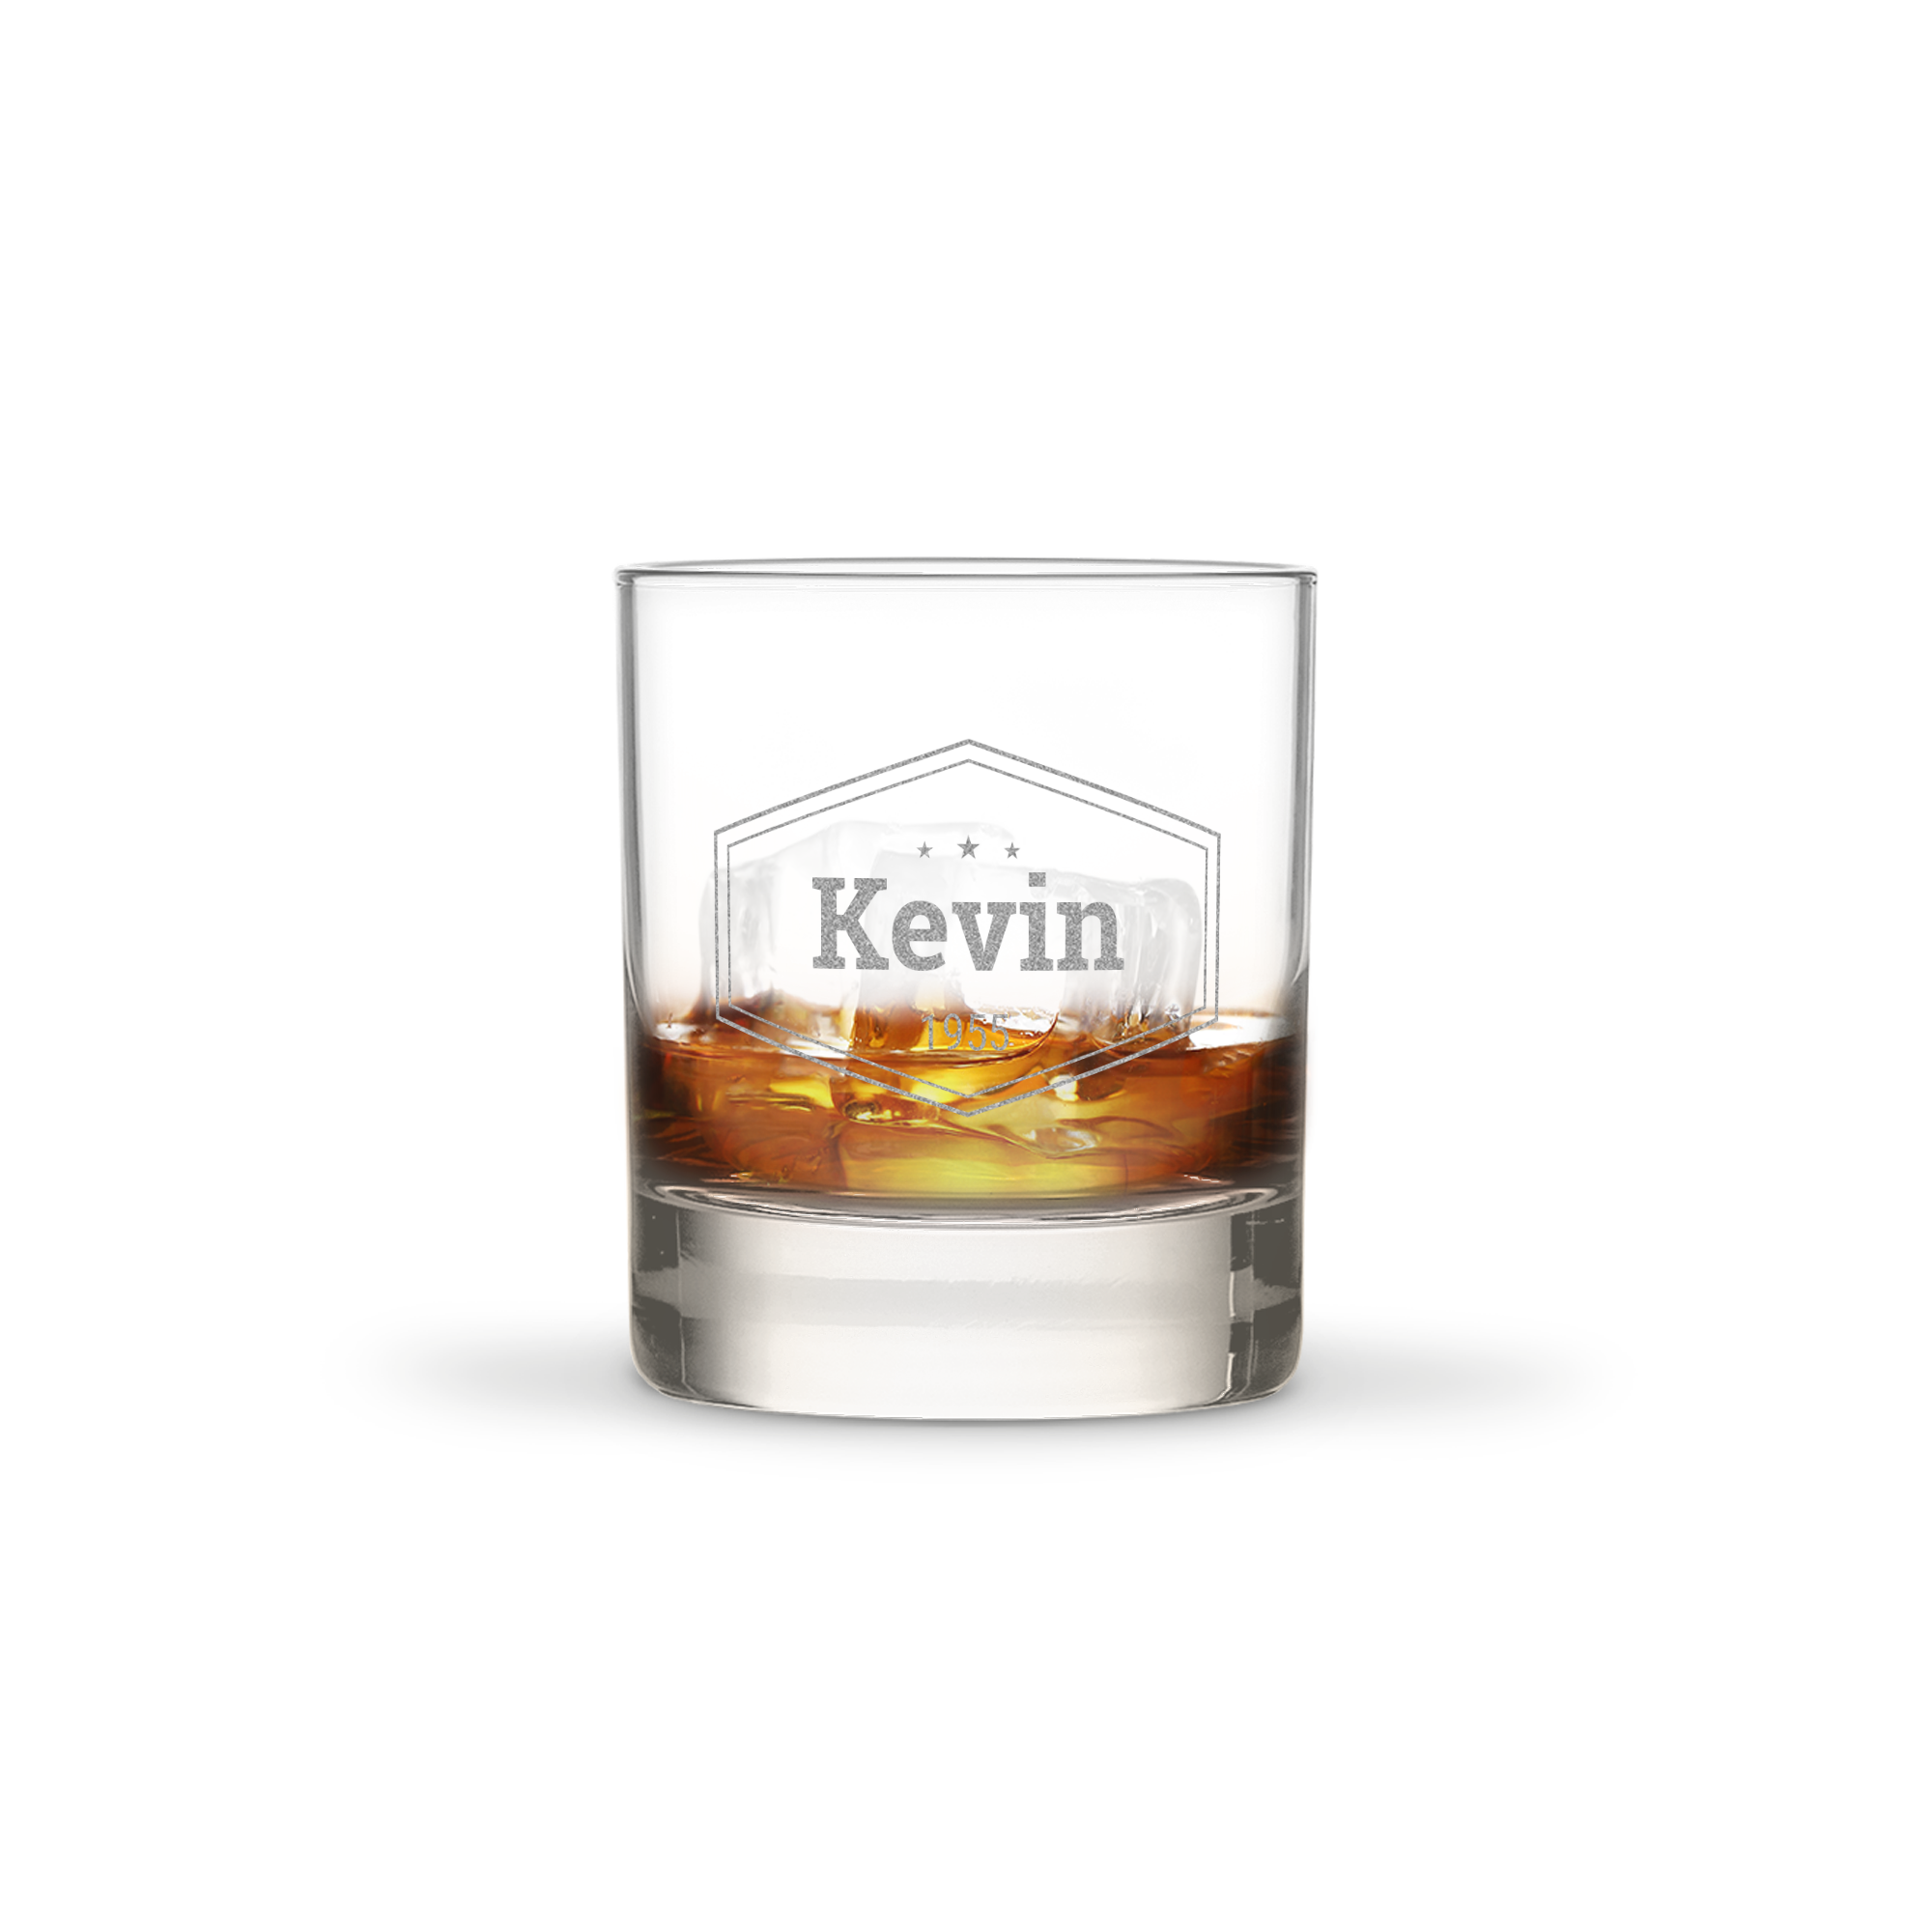 Whiskyglas mit Gravur